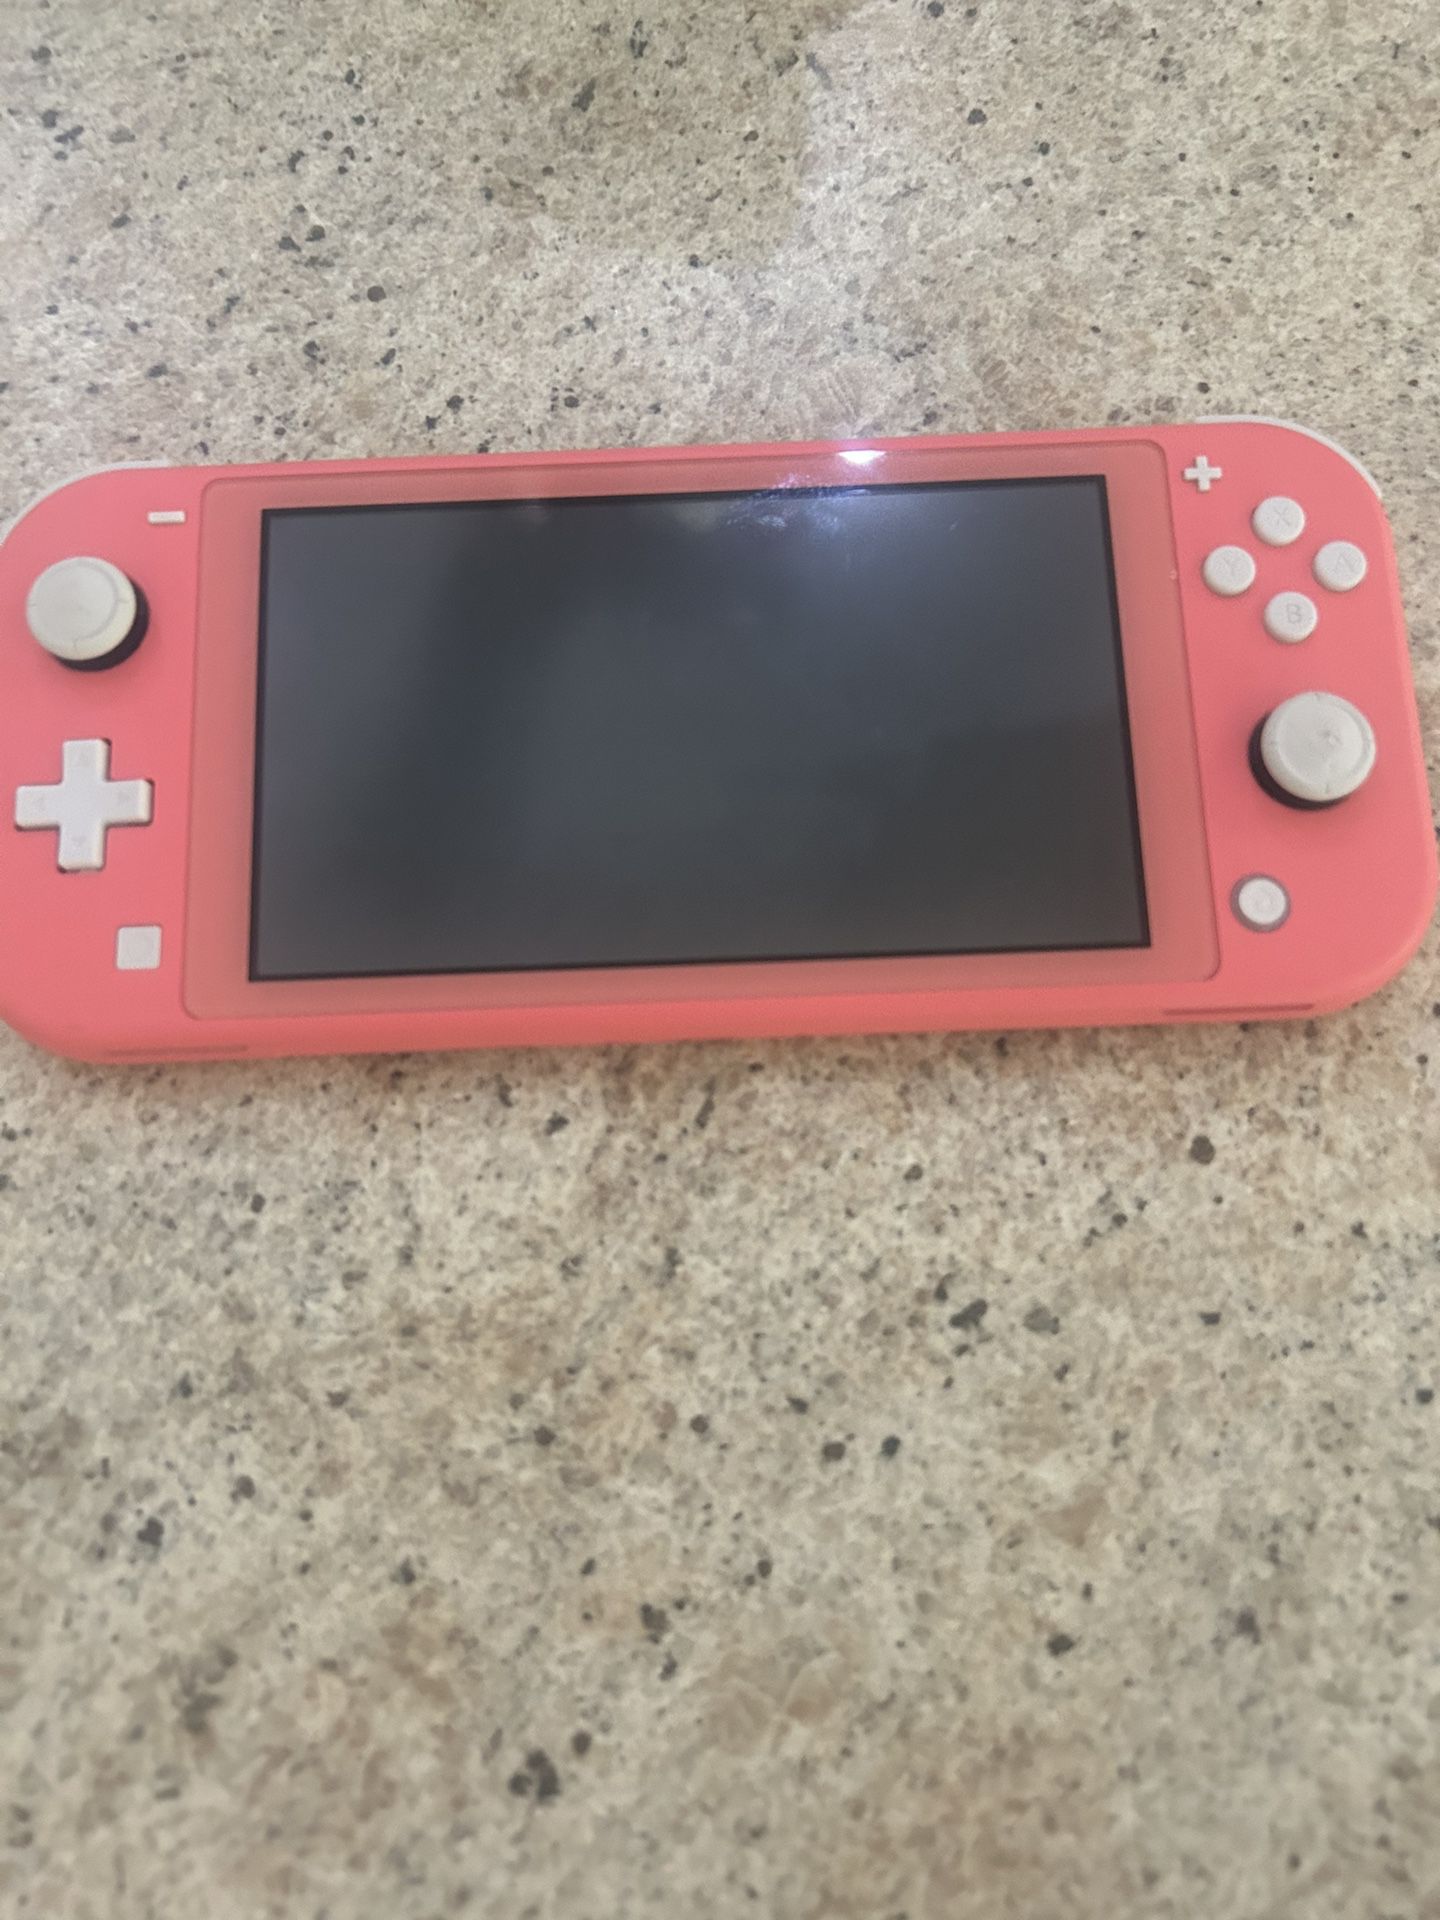 Nintendo Switch Lite-pink